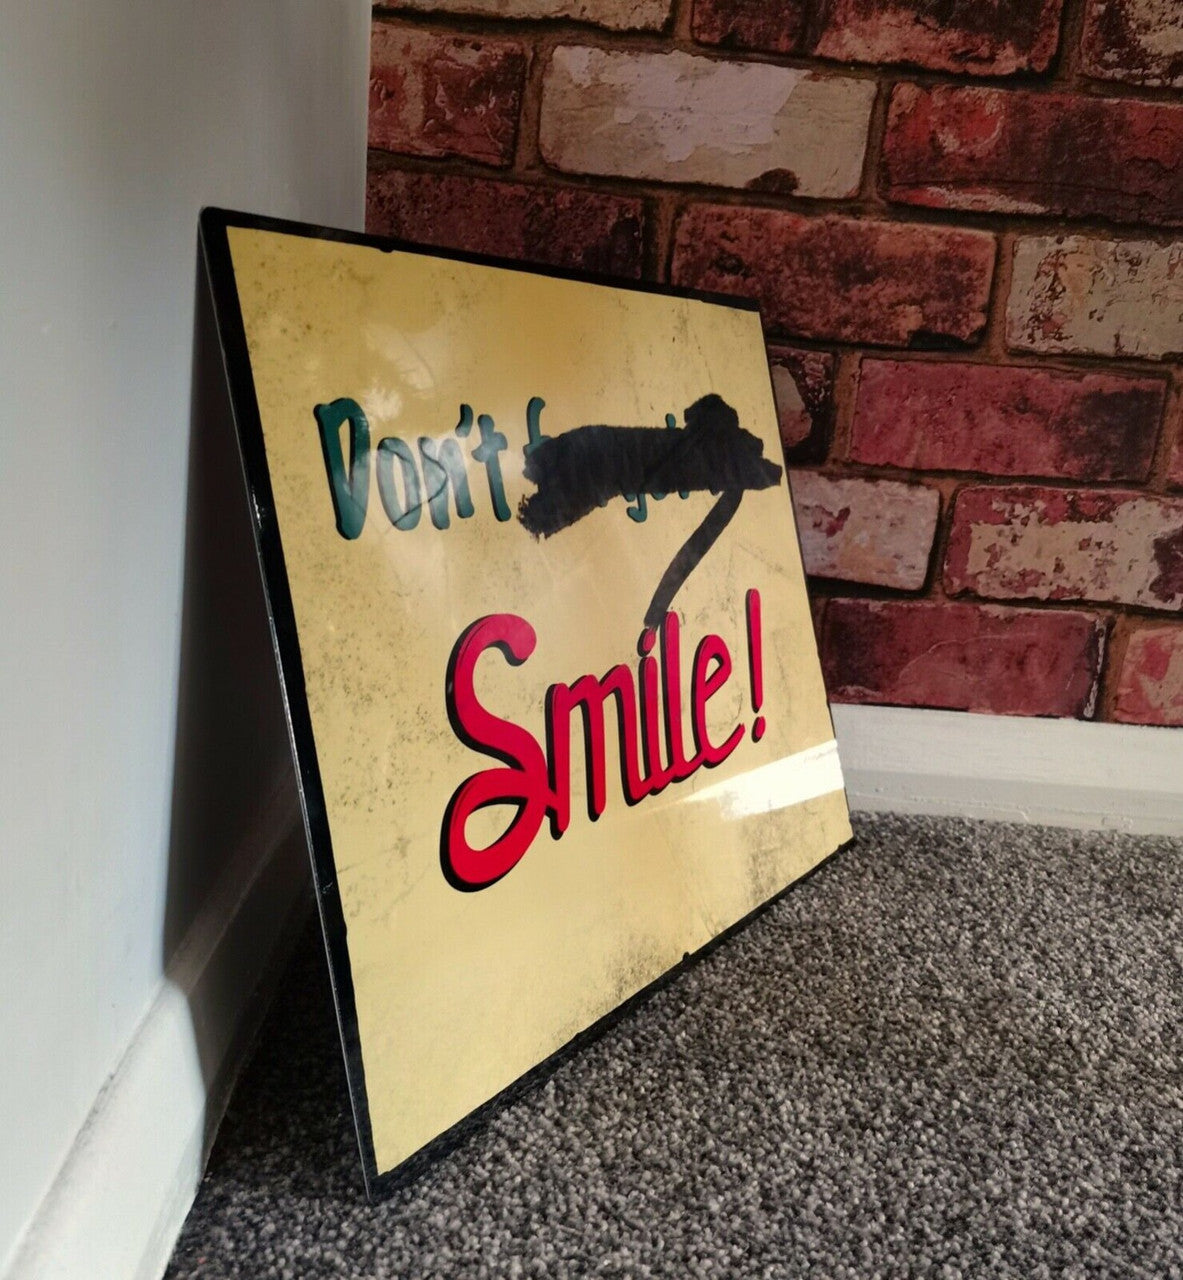 Don't Forget To Smile KiSS Metal Print - Joker Joaquin Phoenix Aluminium Wall Art Clown - Home Decor - Office Sign - Folie Deux